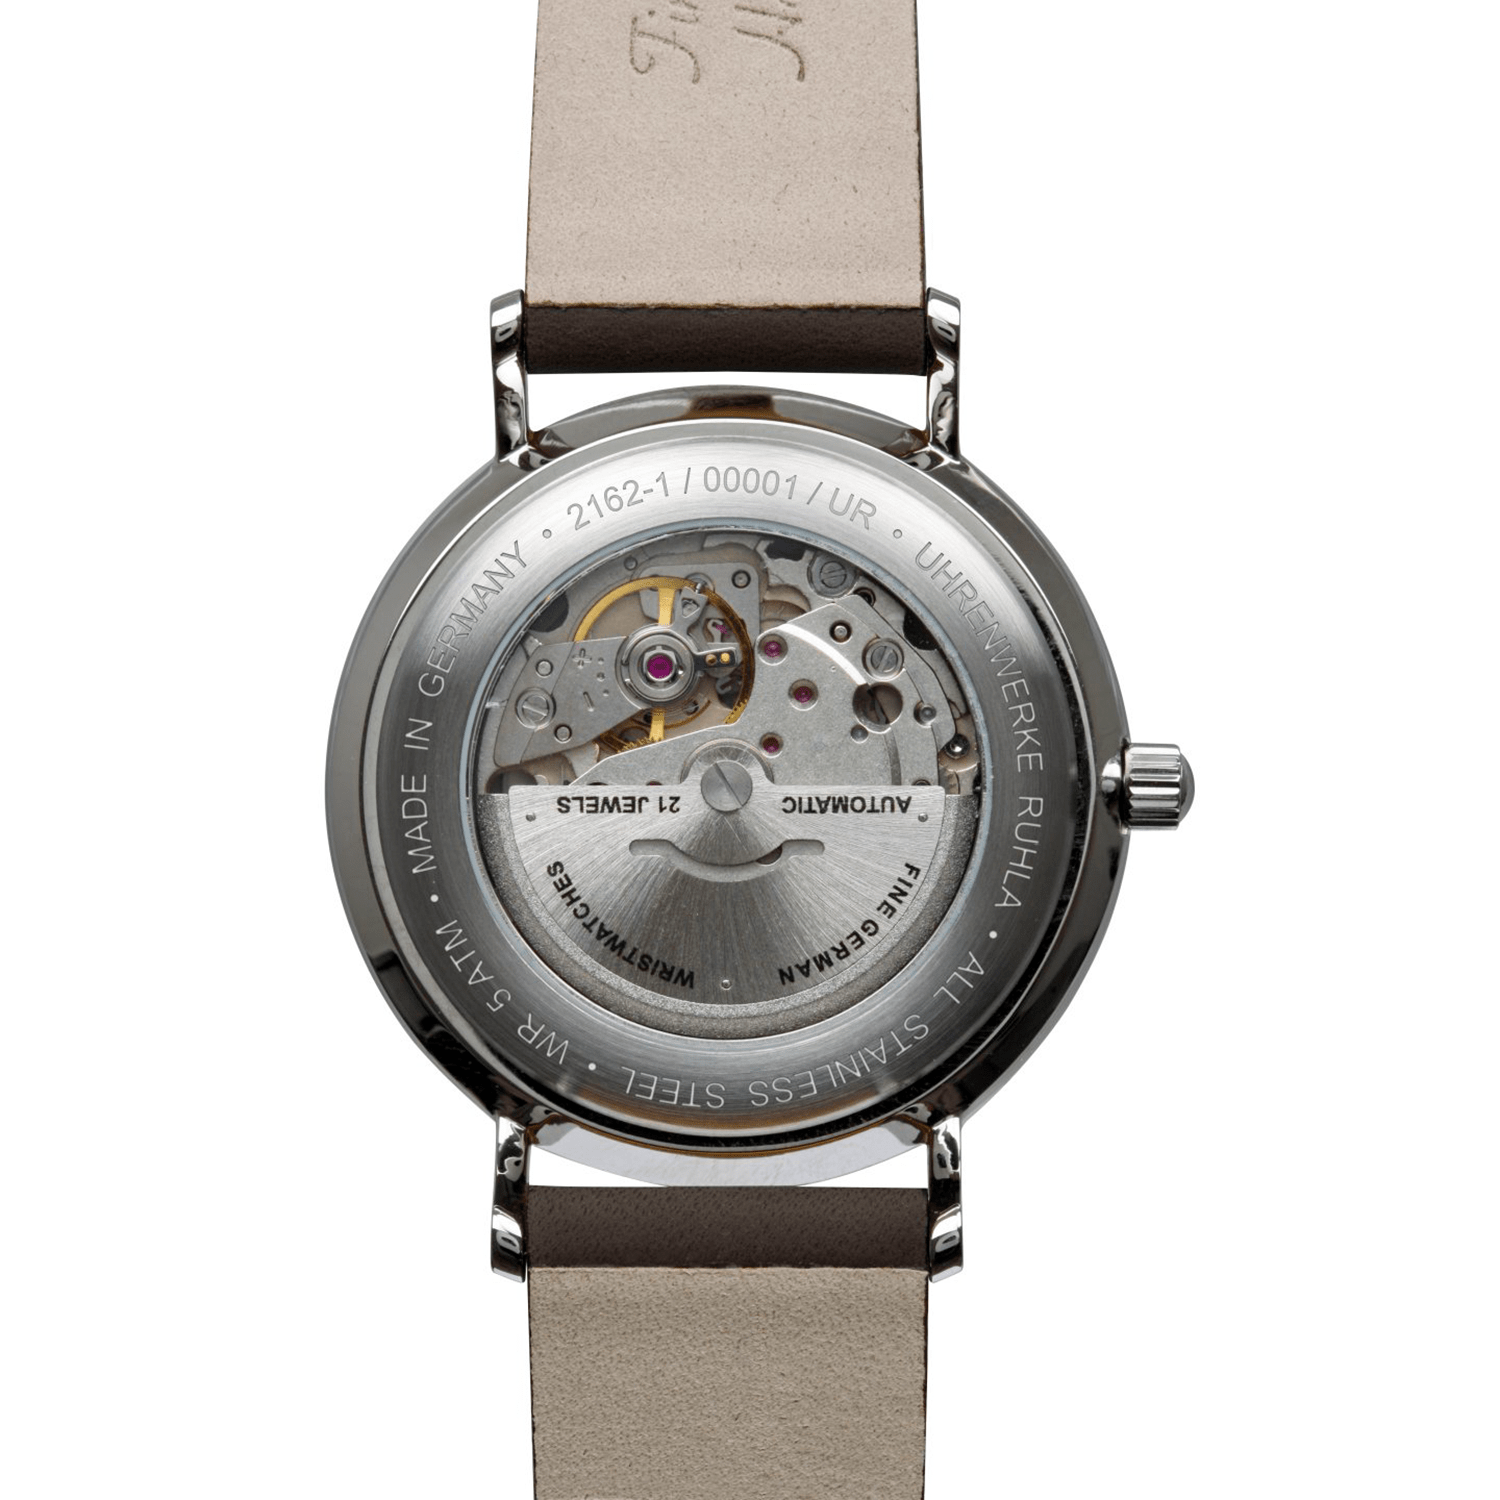 Bauhaus Watch 21621. Discover how the Bauhaus influenced design history